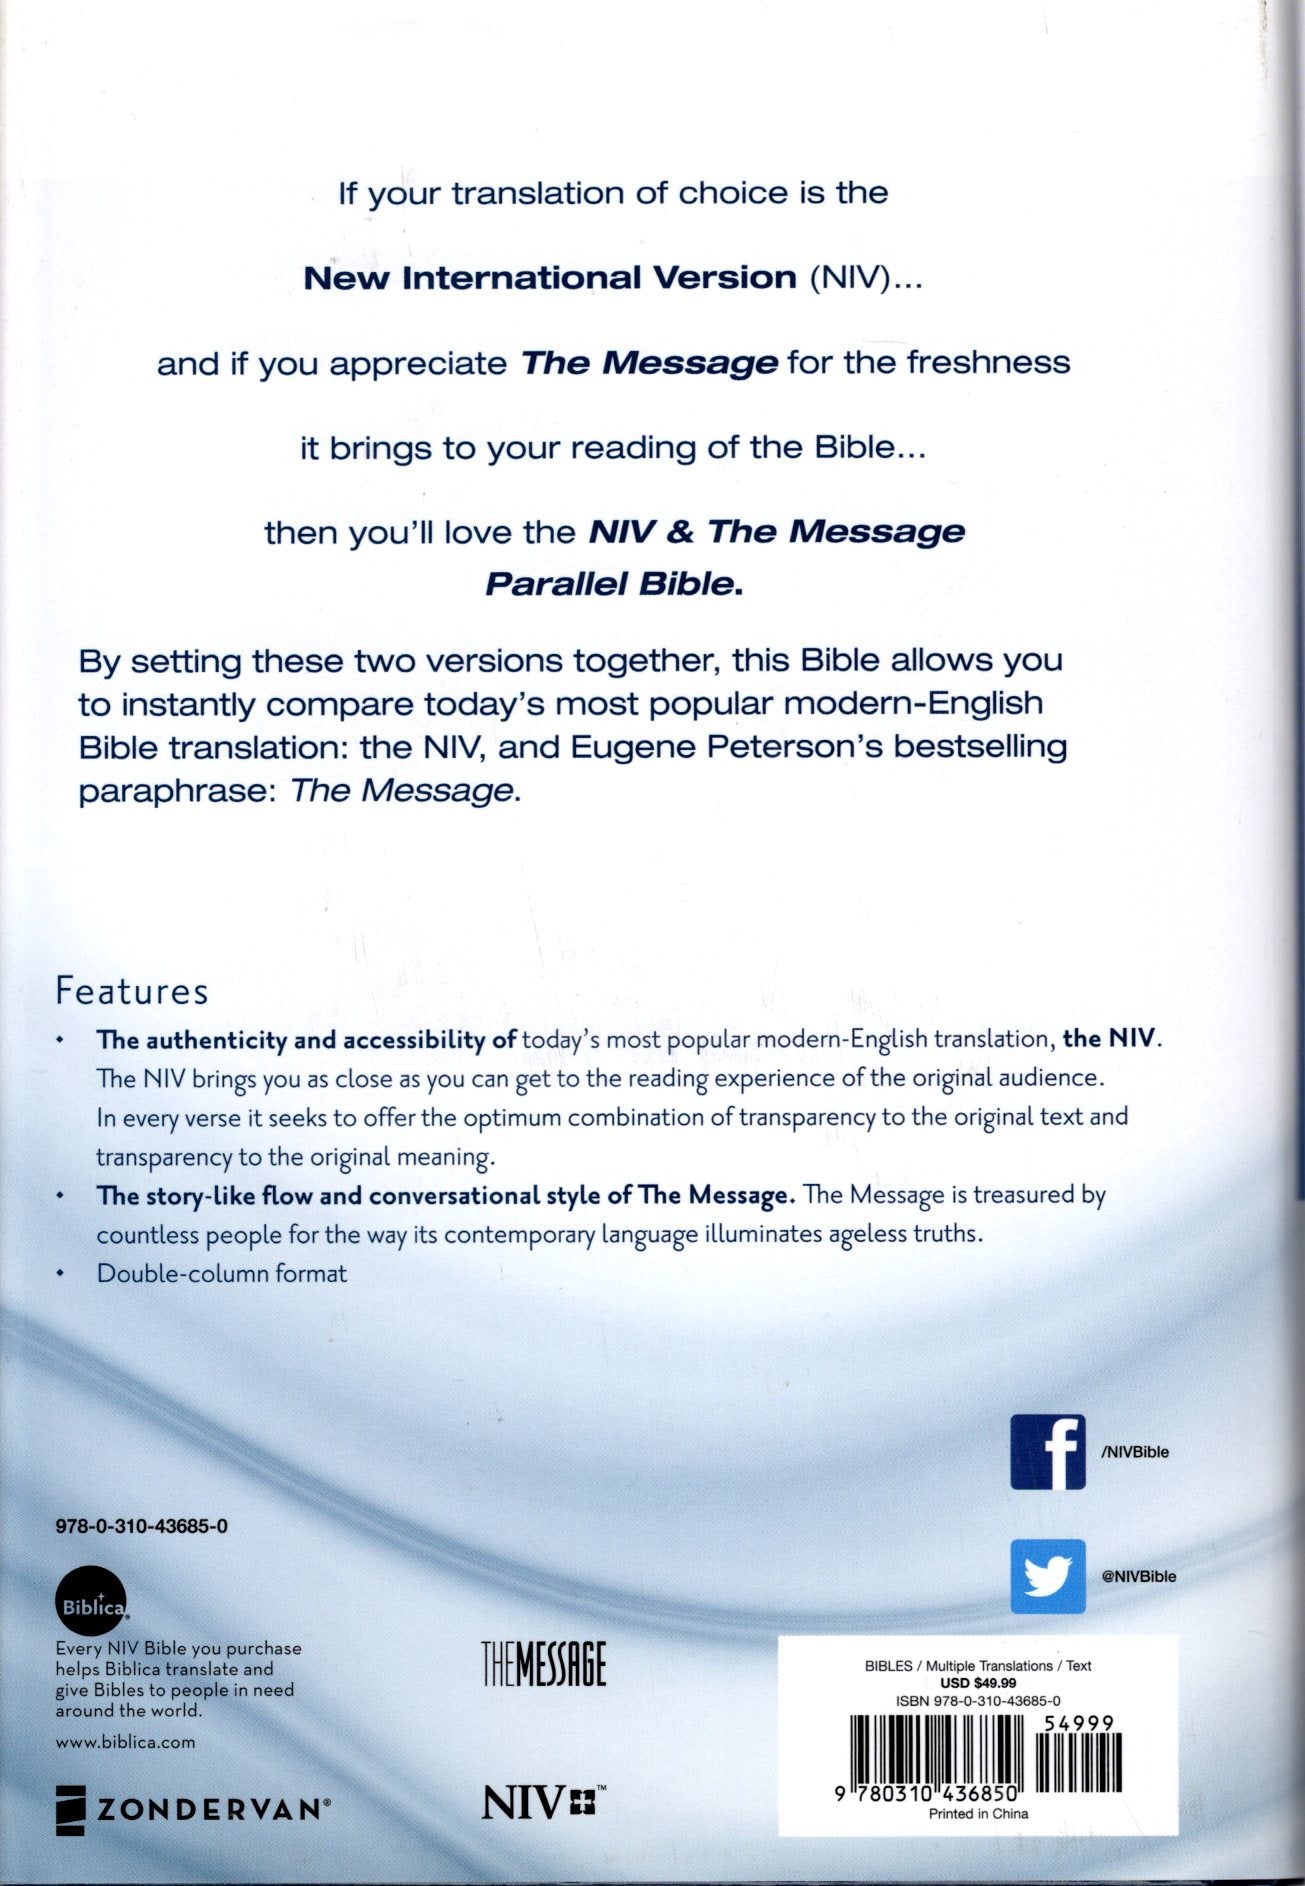 Zondervan - NIV® & The Message Parallel Bible, Large Print - Hardcover w/Dust Jacket